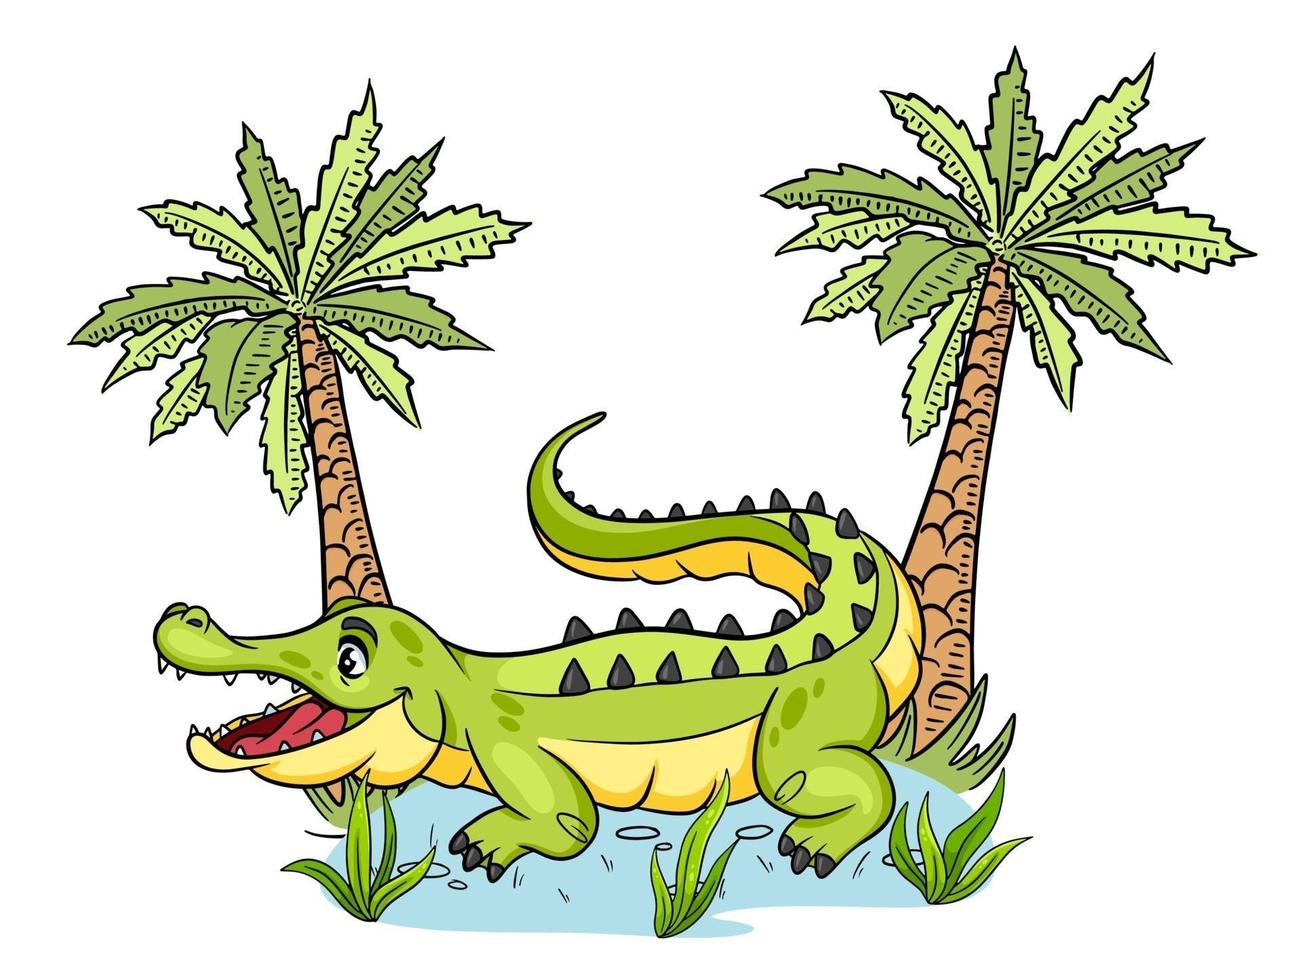 Tiercharakter lustiges Krokodil im Cartoon-Stil. Kinderillustration. vektor